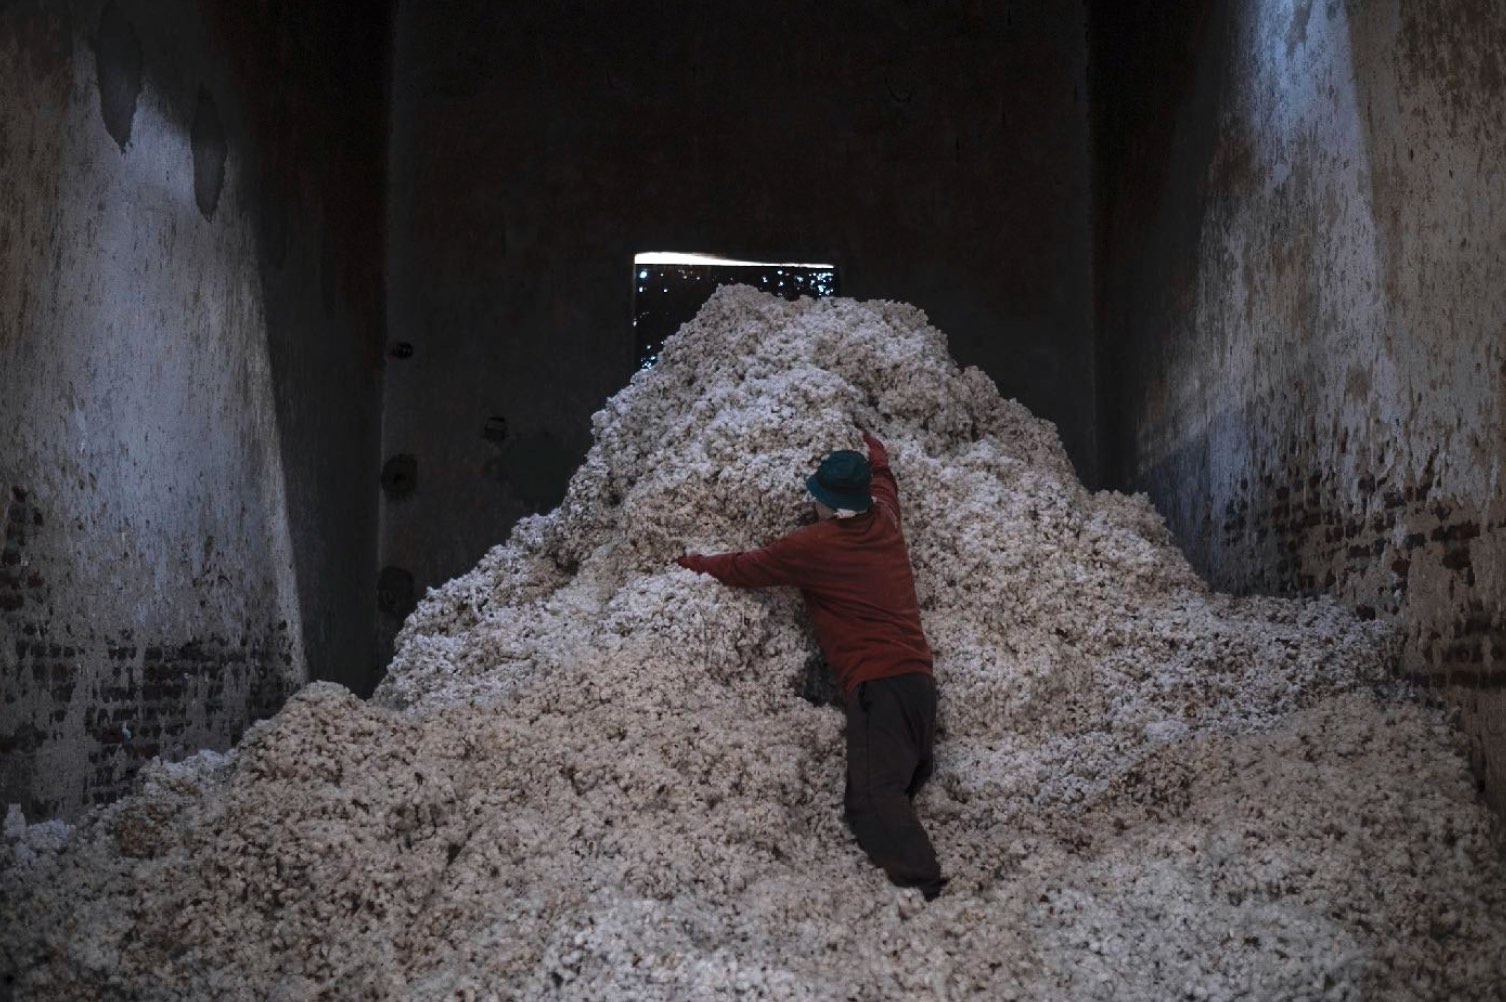 A mountain of cotton